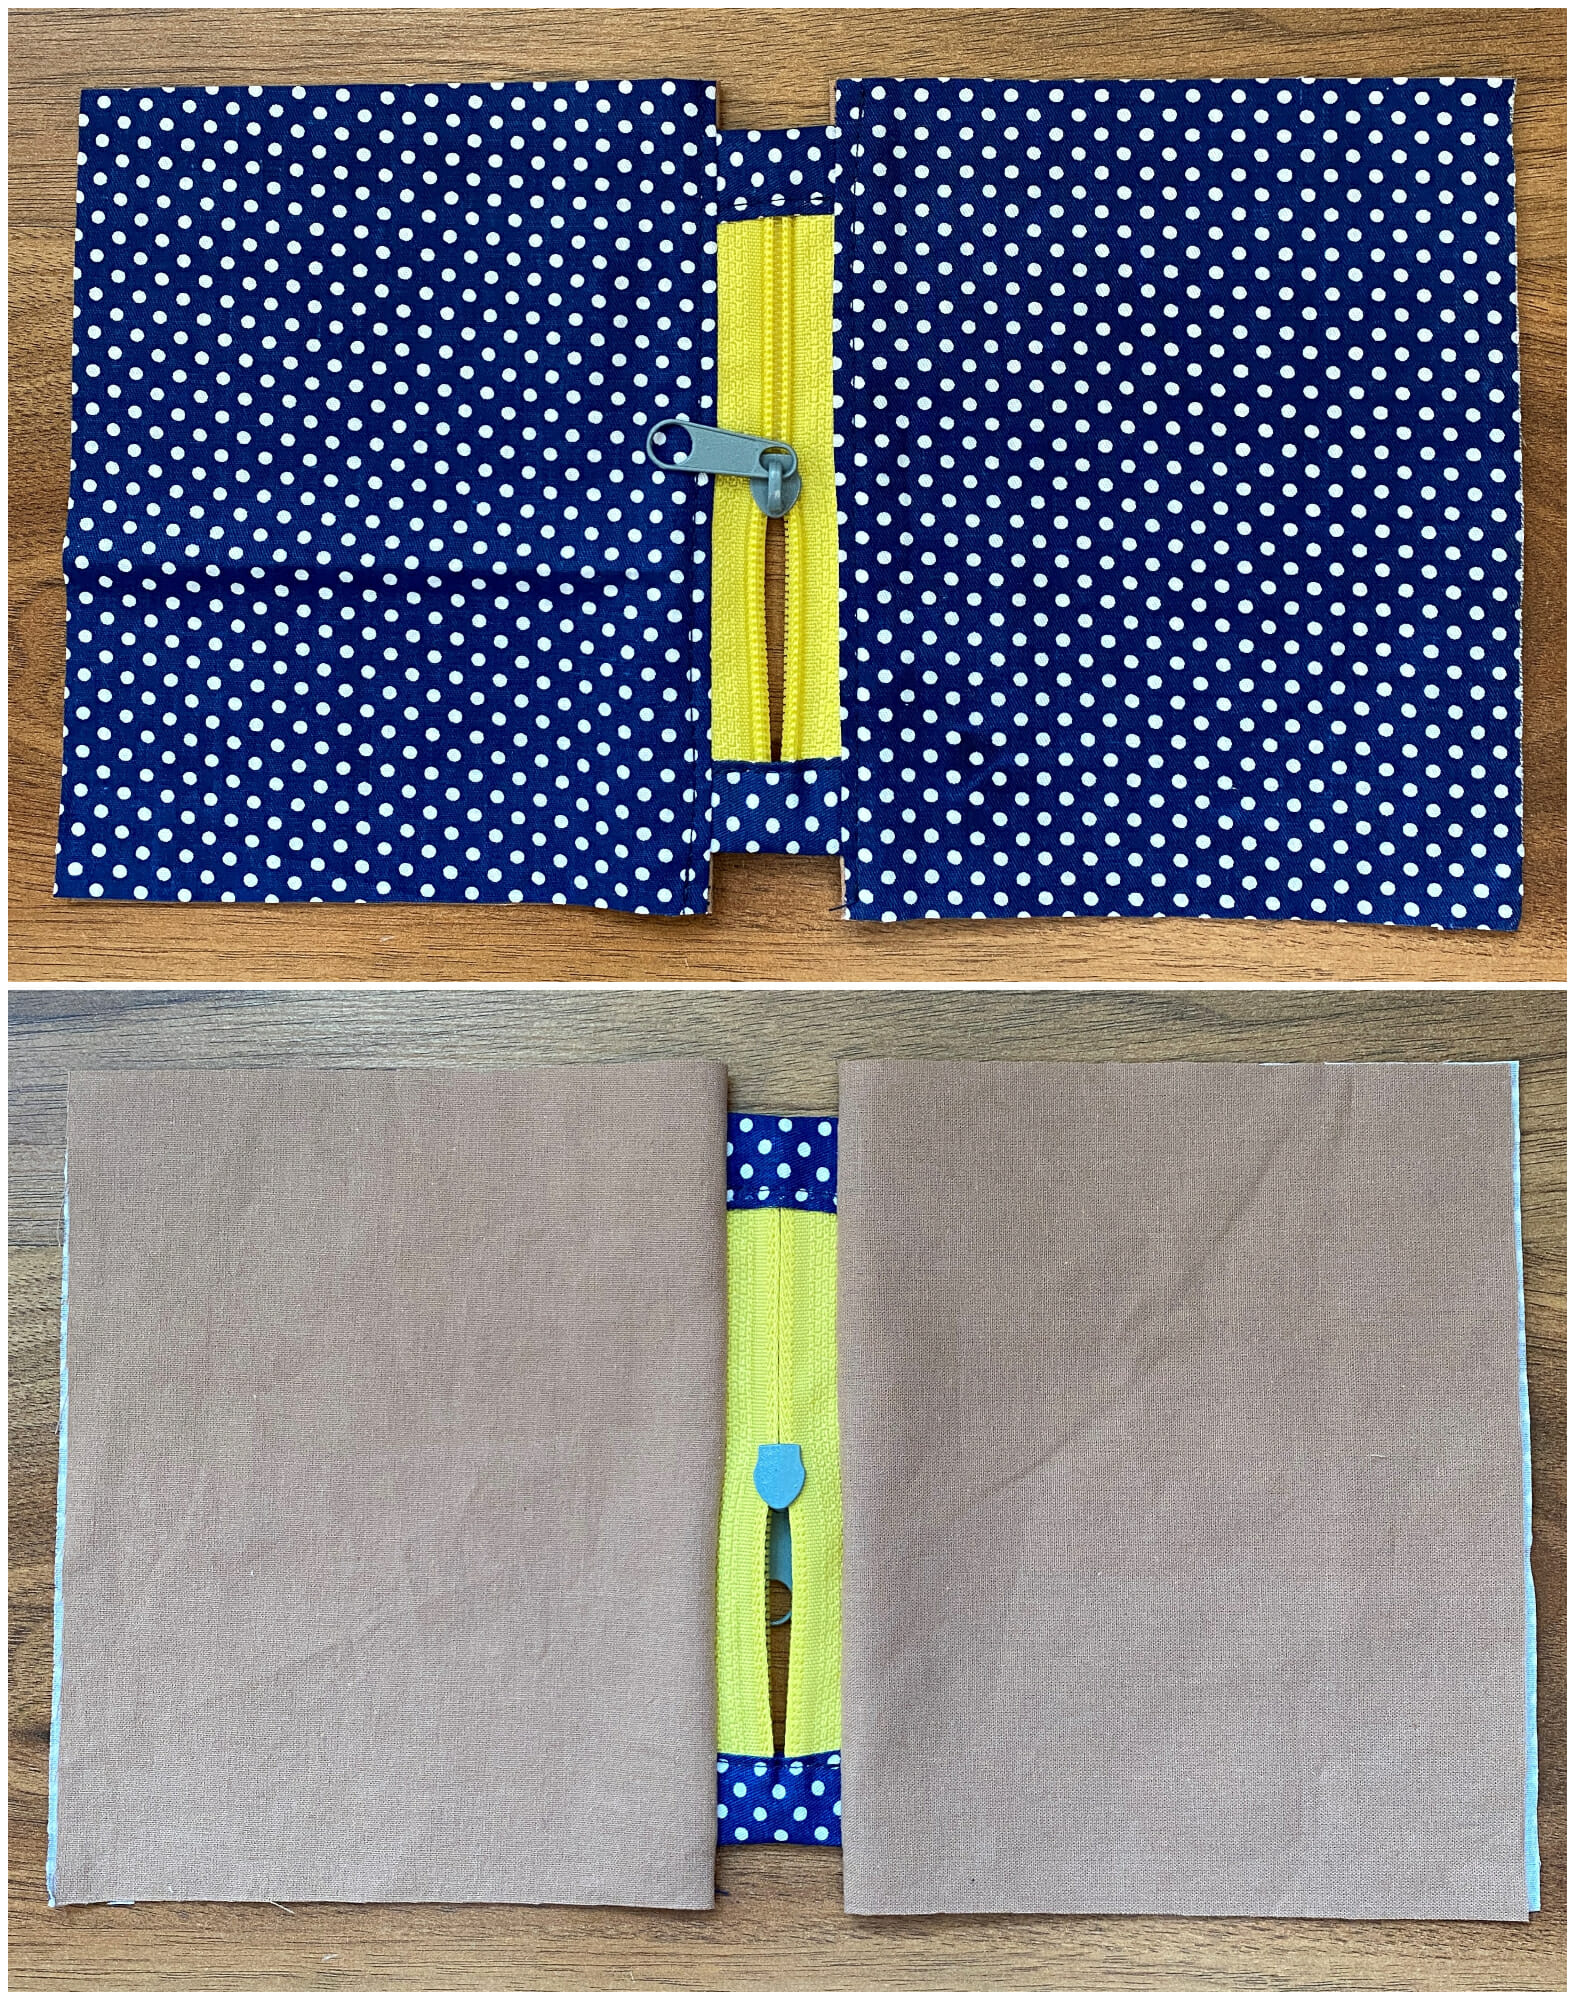 How to Sew a Lined Zipper bag - Easy Zipper bag FREE Tutorial - Fast Zipper  Pouch, Easy Zipper Purse 